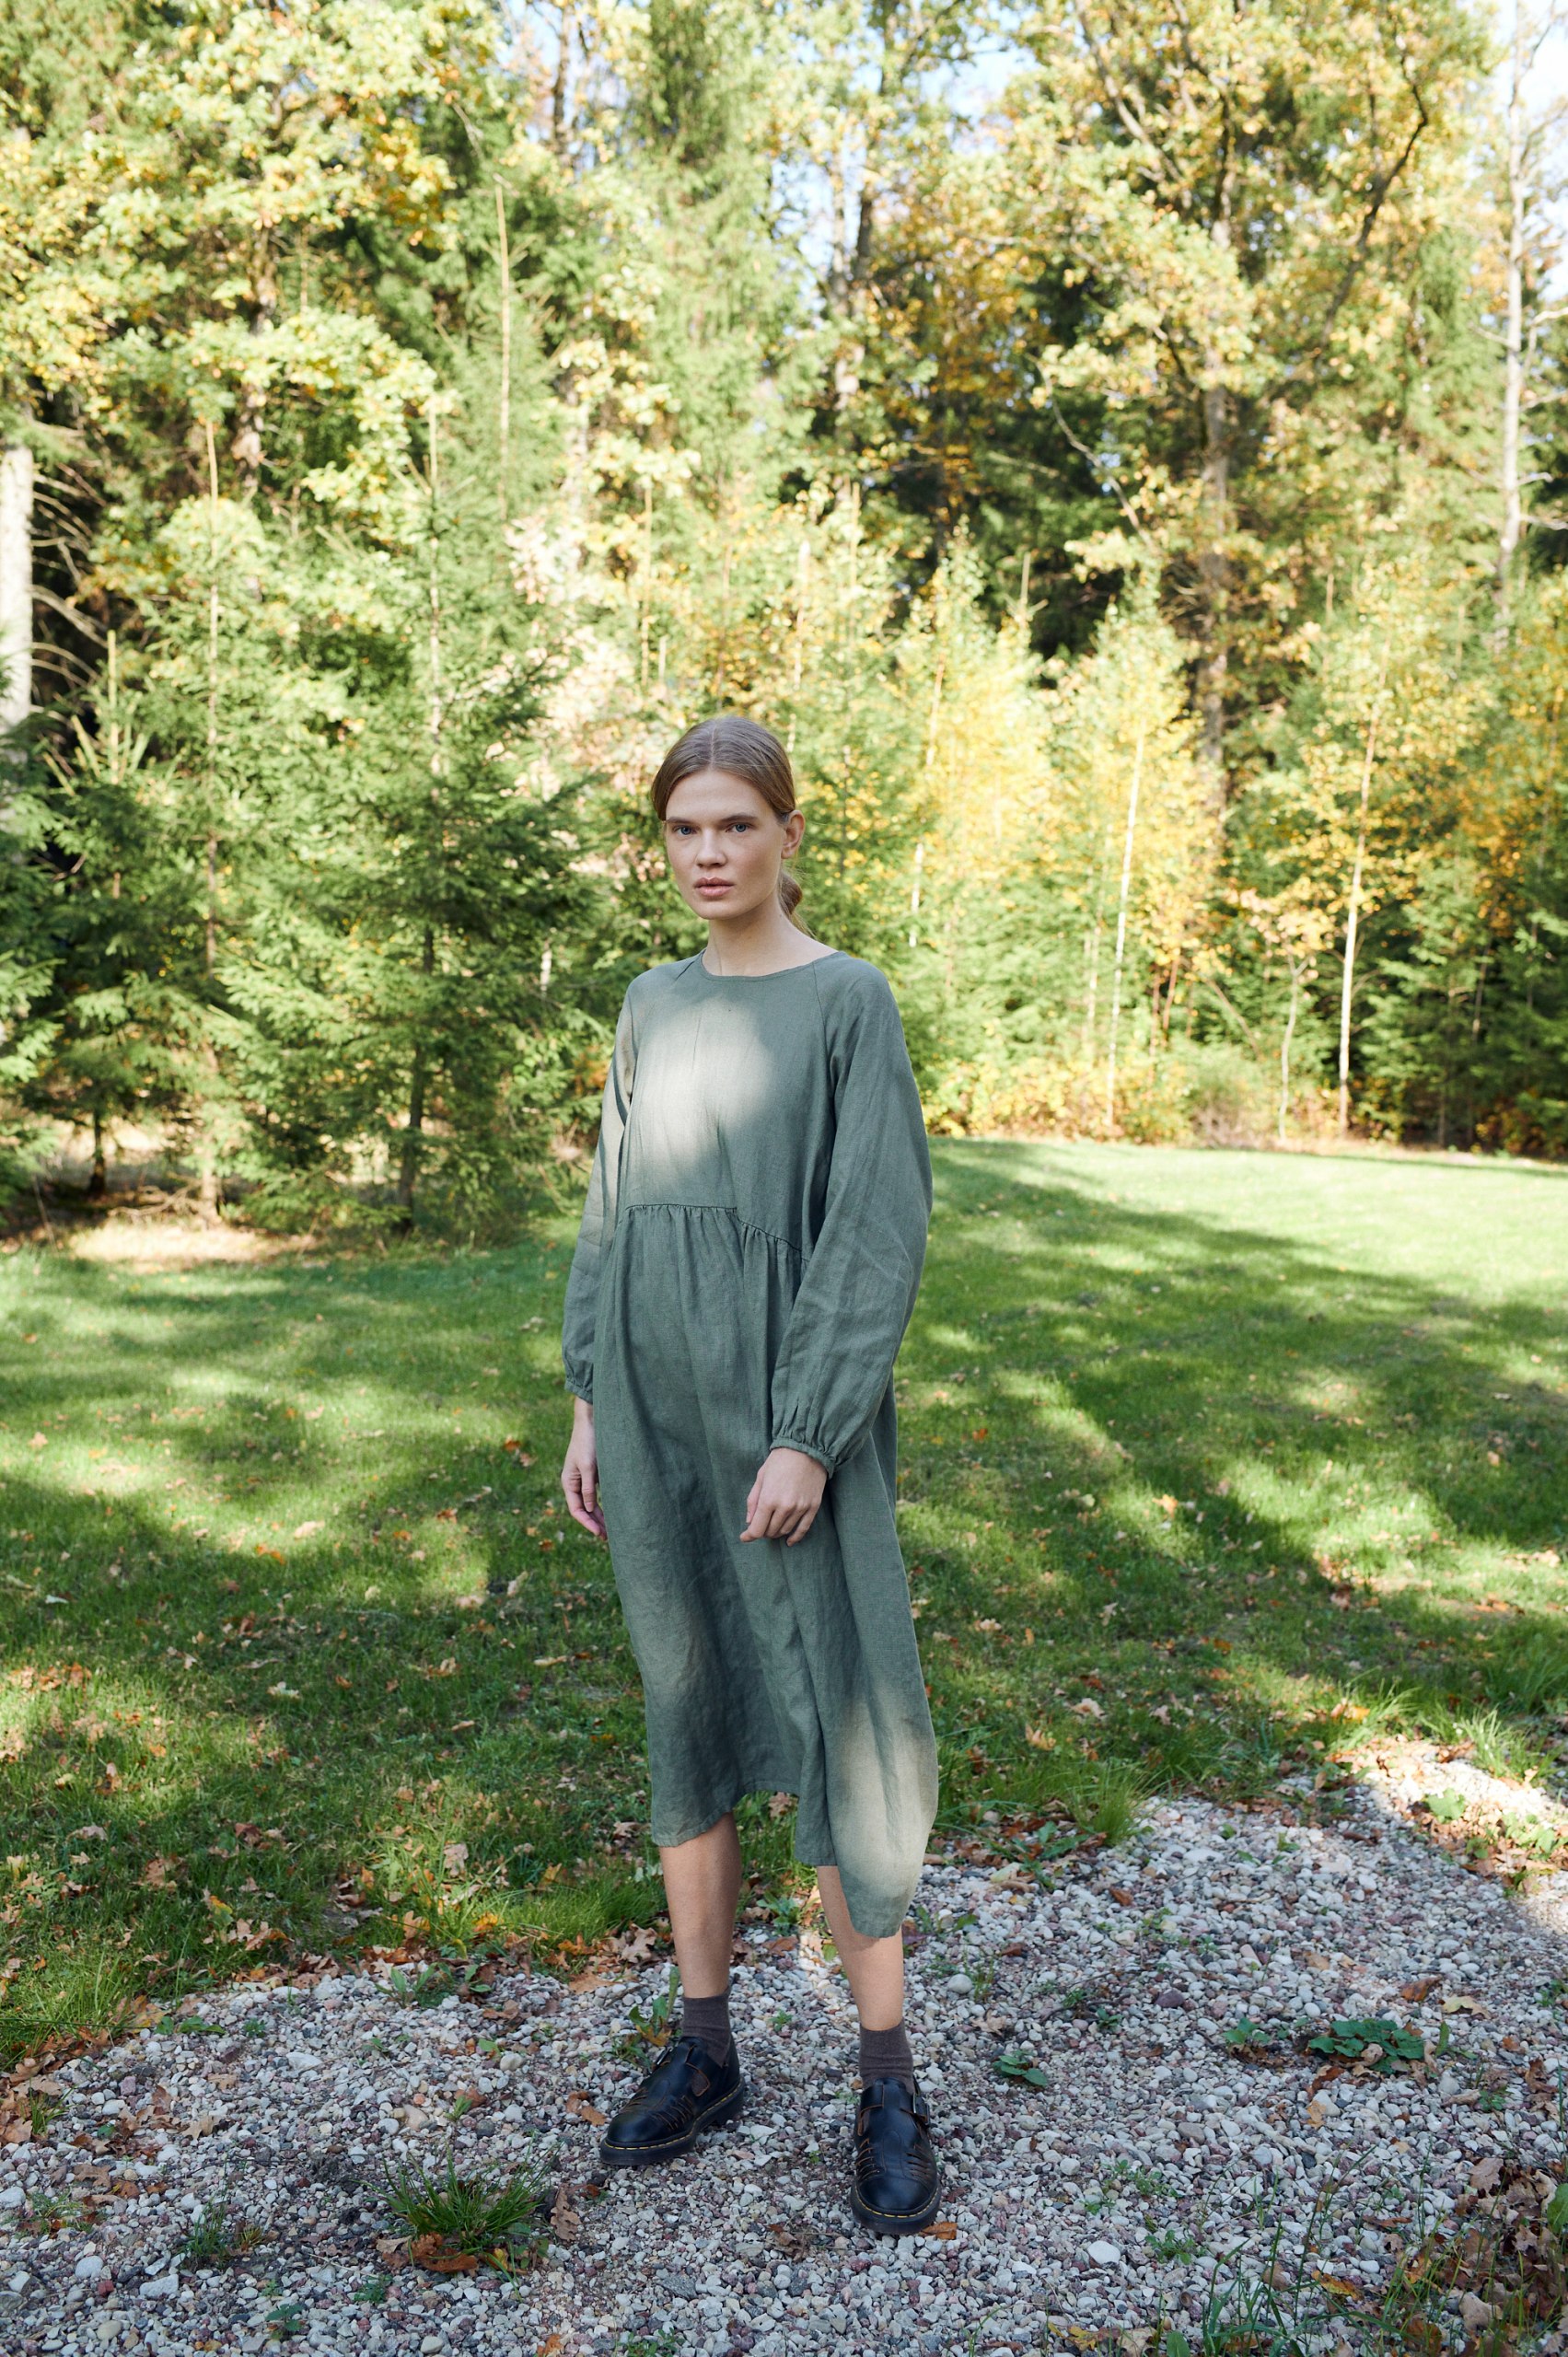 A model in long sleeve pine green linen dress